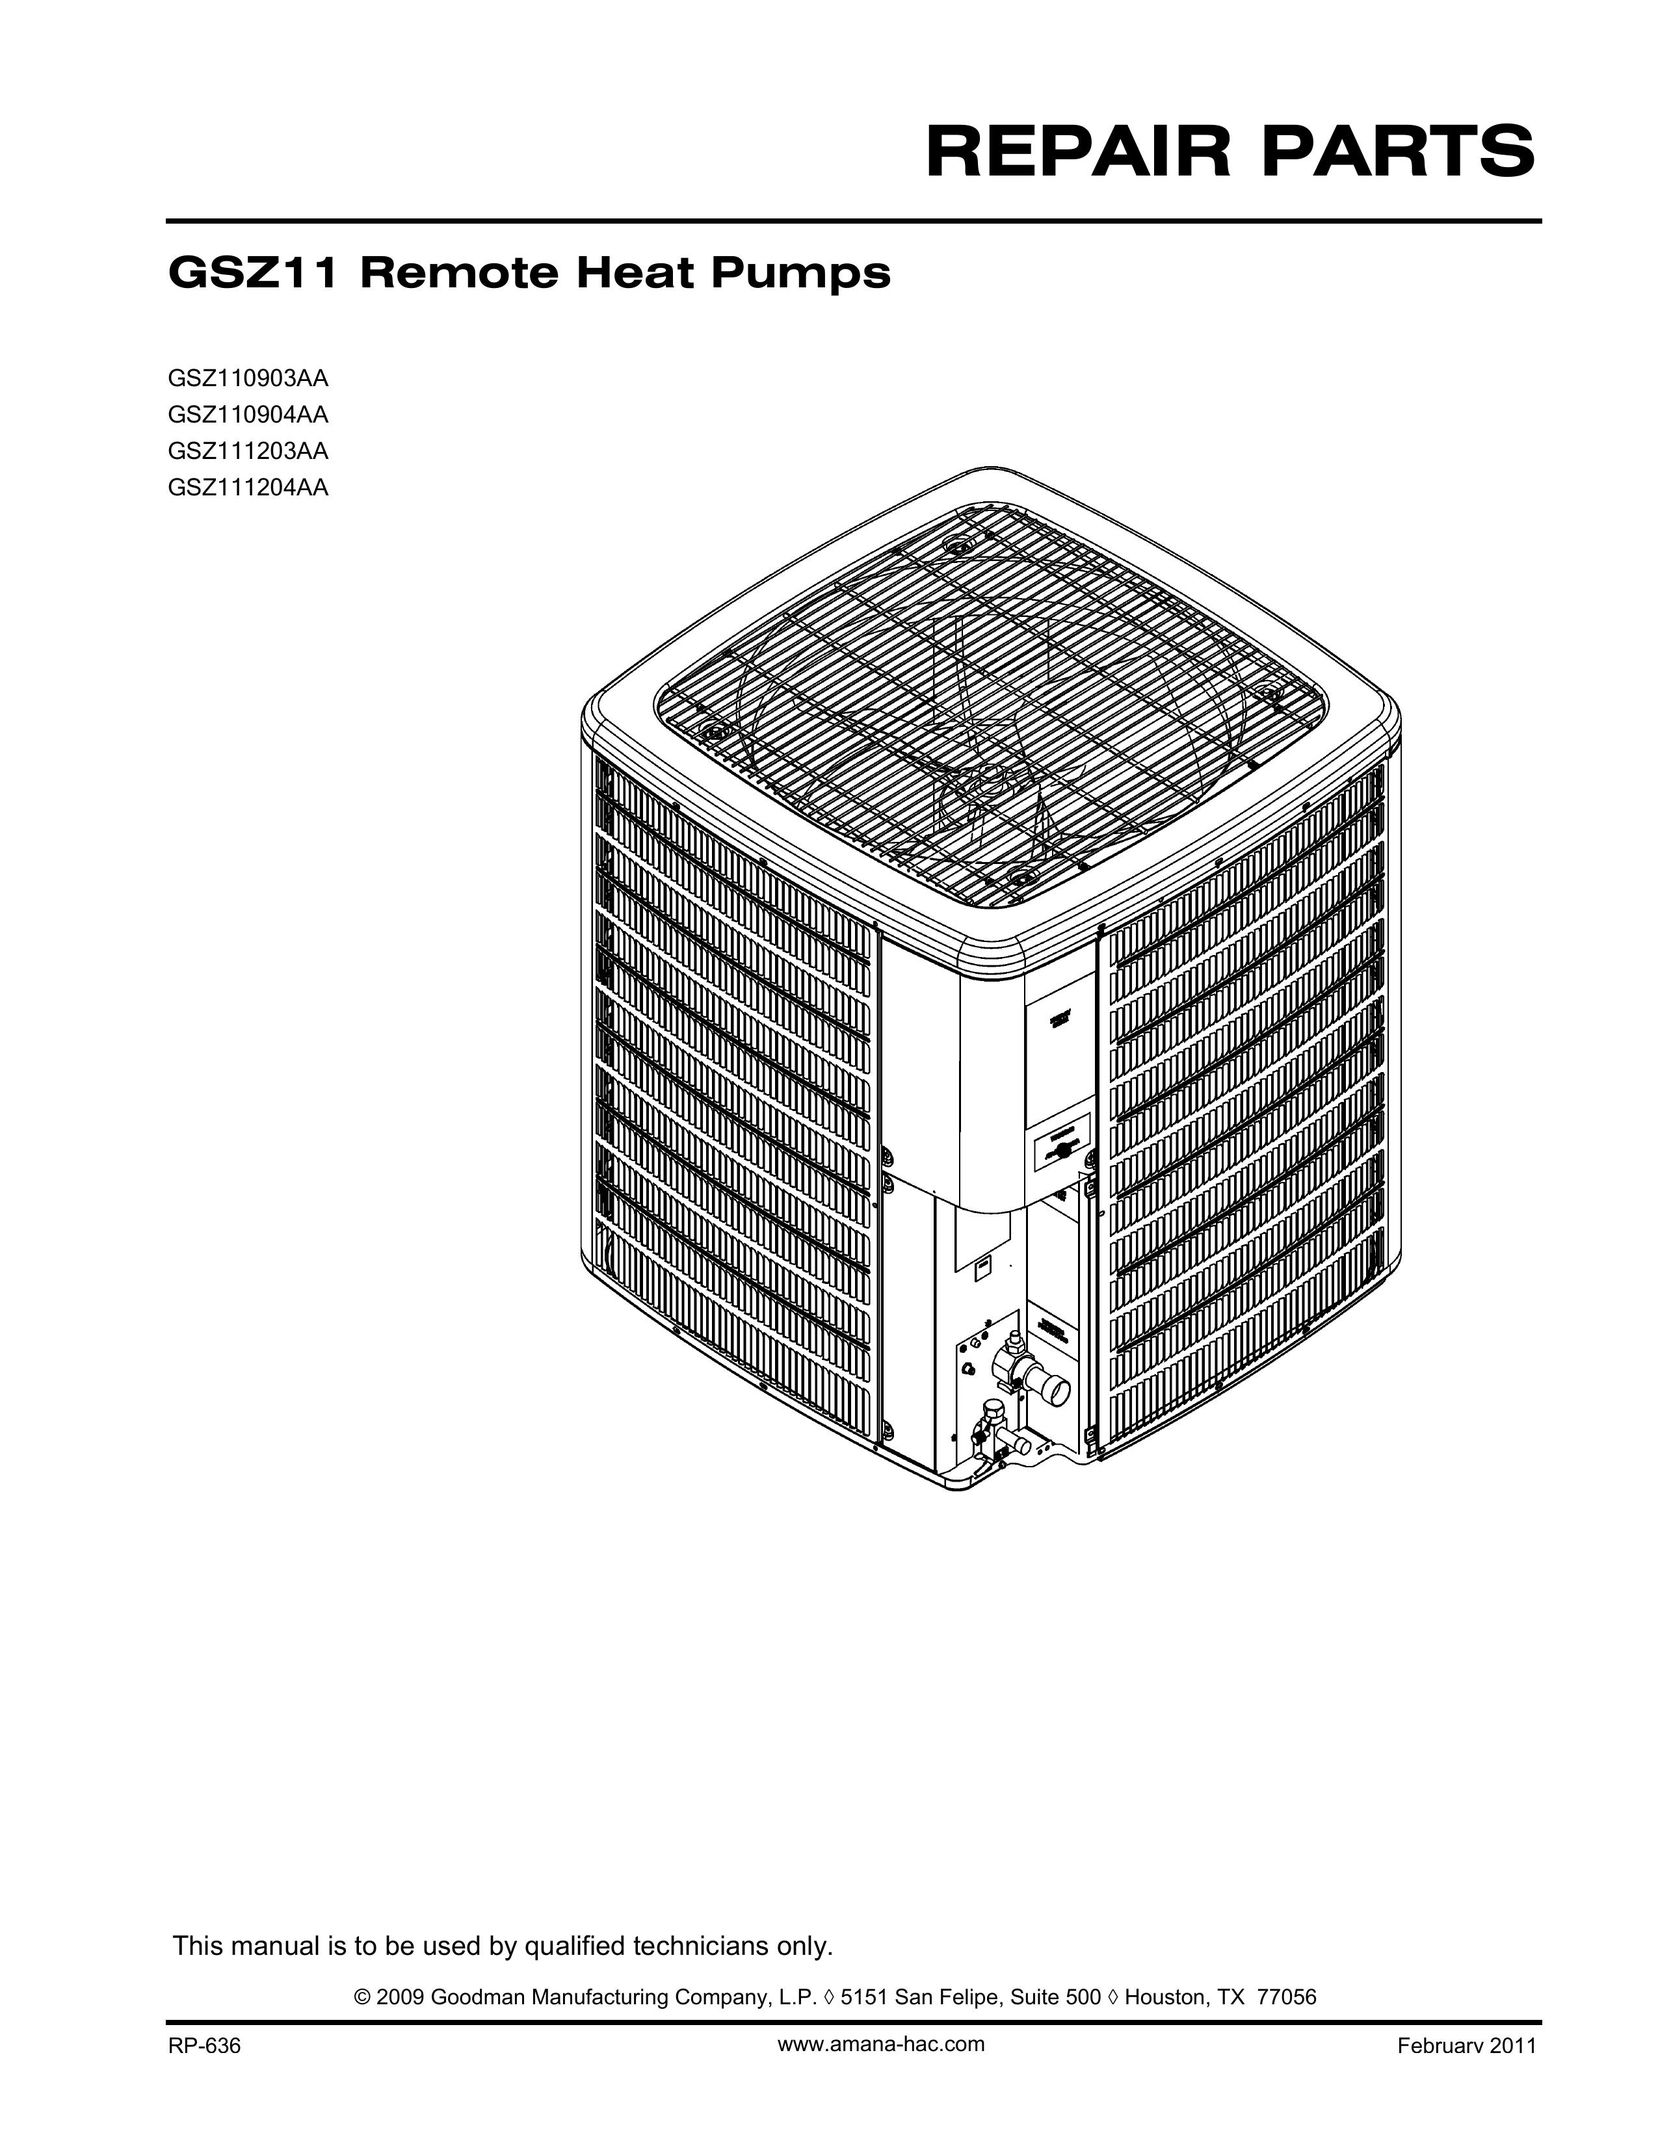 Goodman Mfg GSZ11204AA Heat Pump User Manual